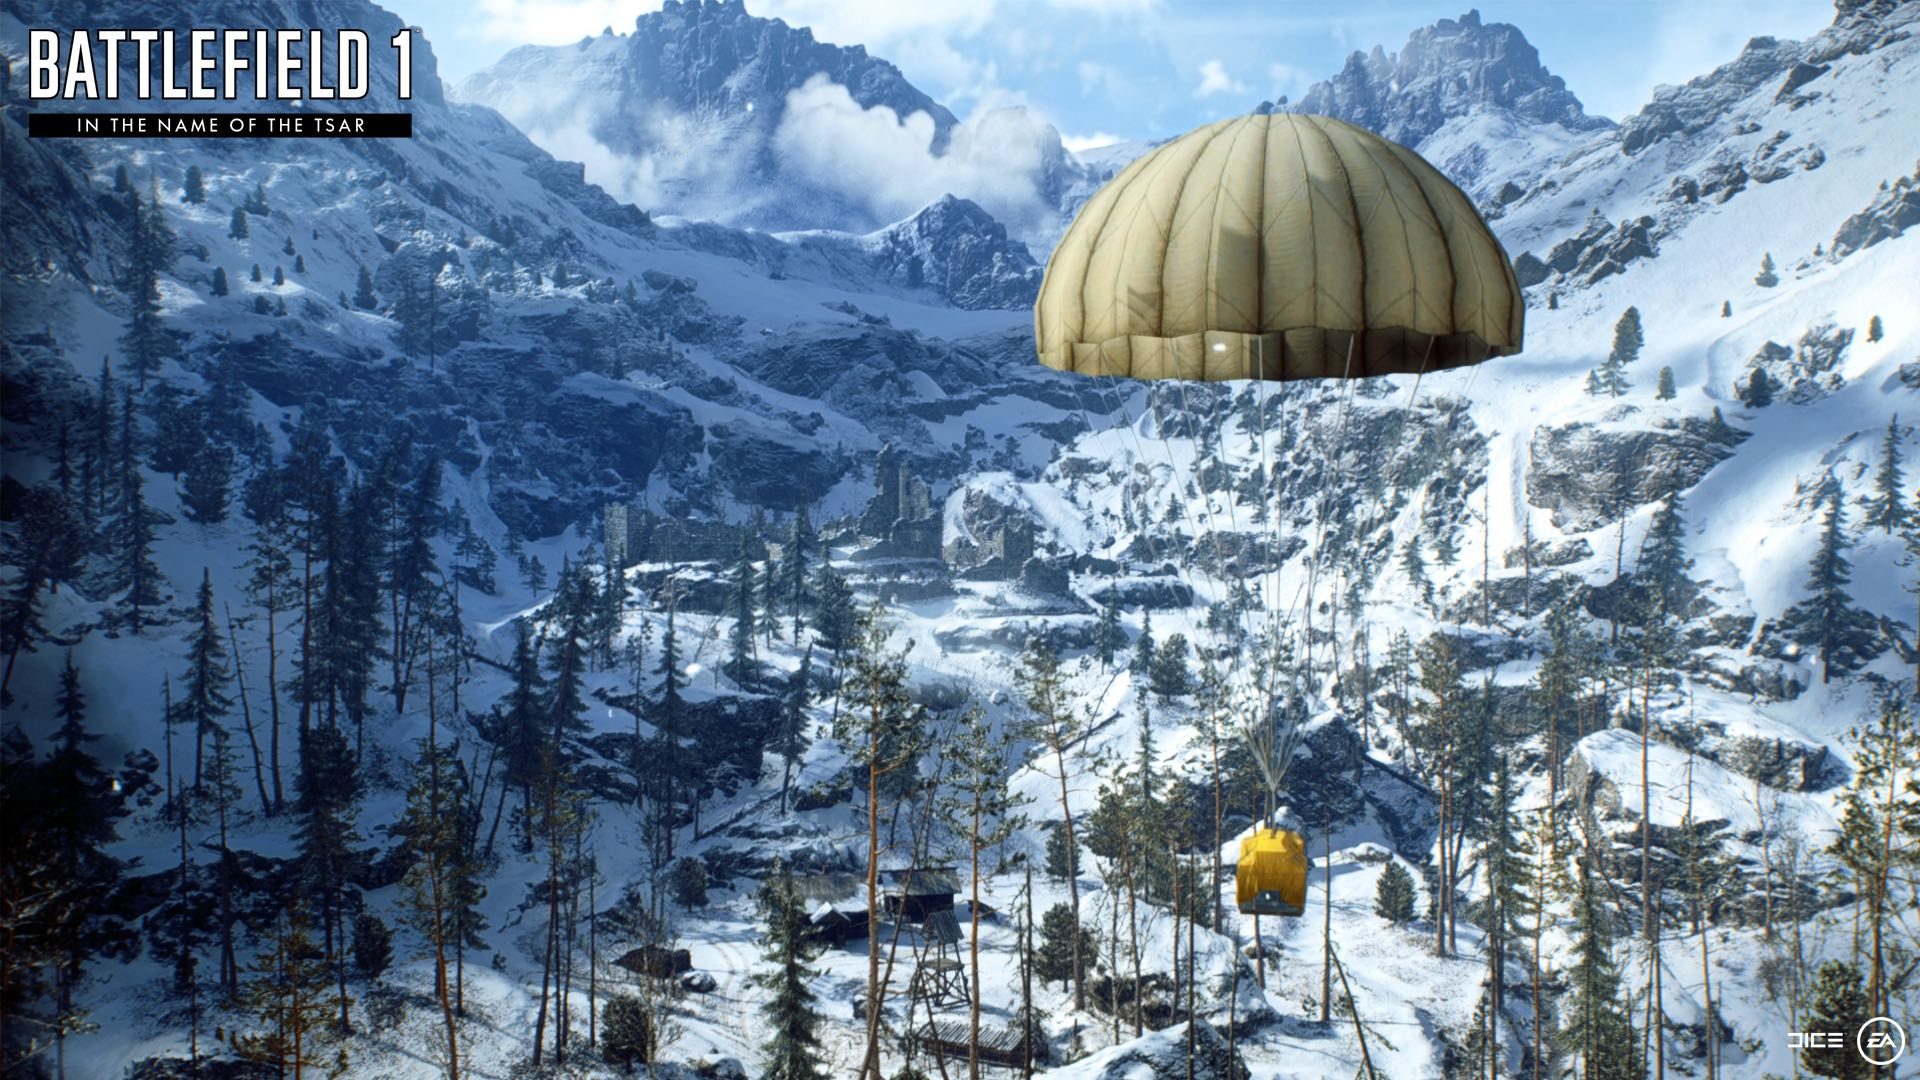 Battlefield 1 screenshot in the name of the tsar